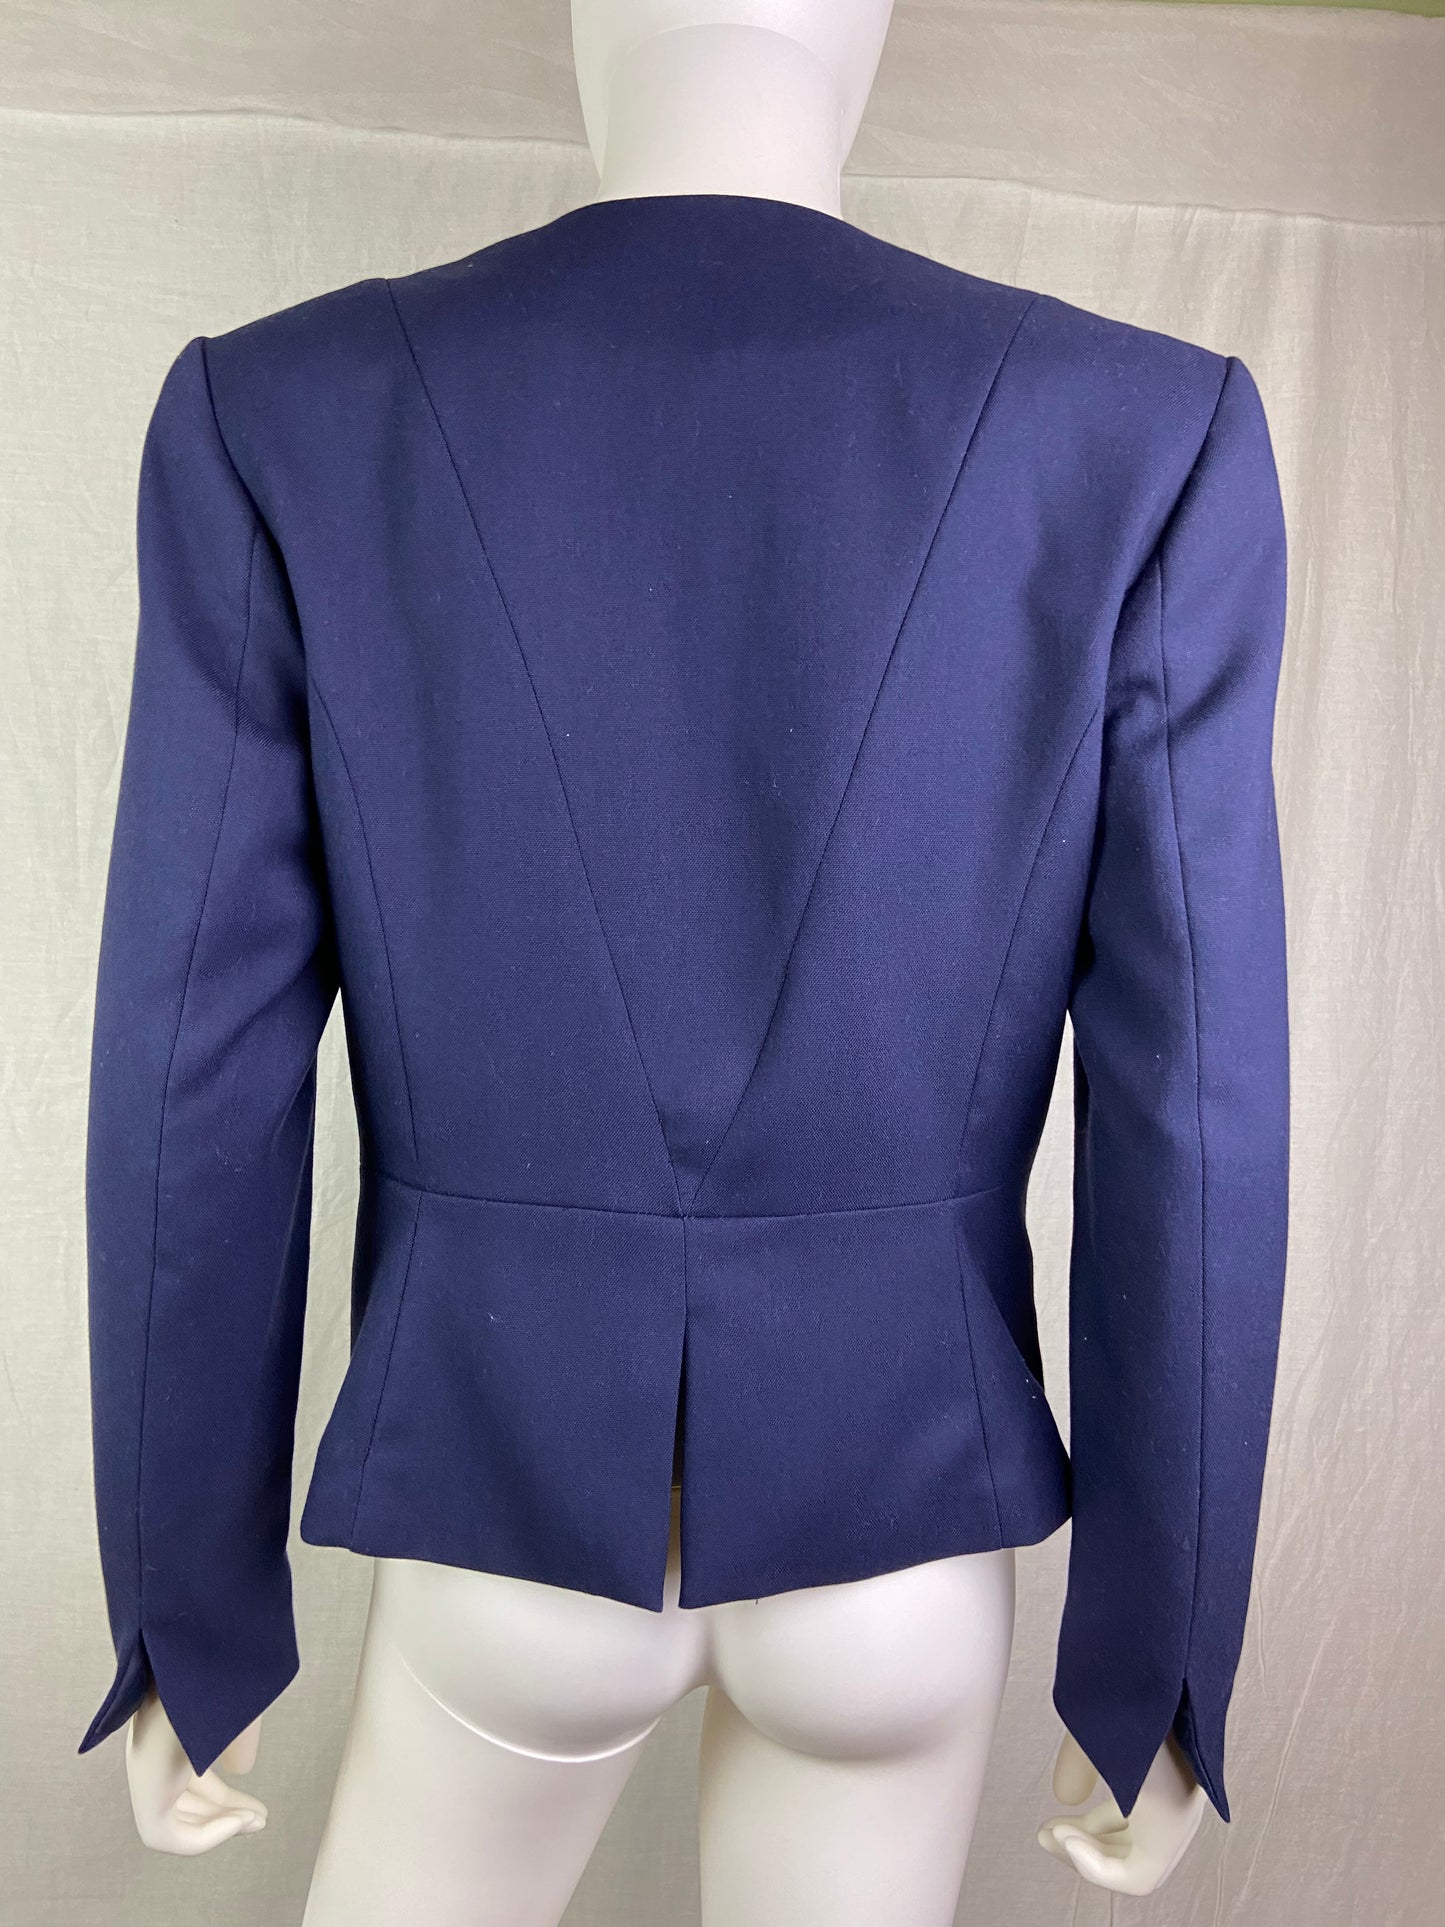 H&M Navy Blue Career Blazer Jacket